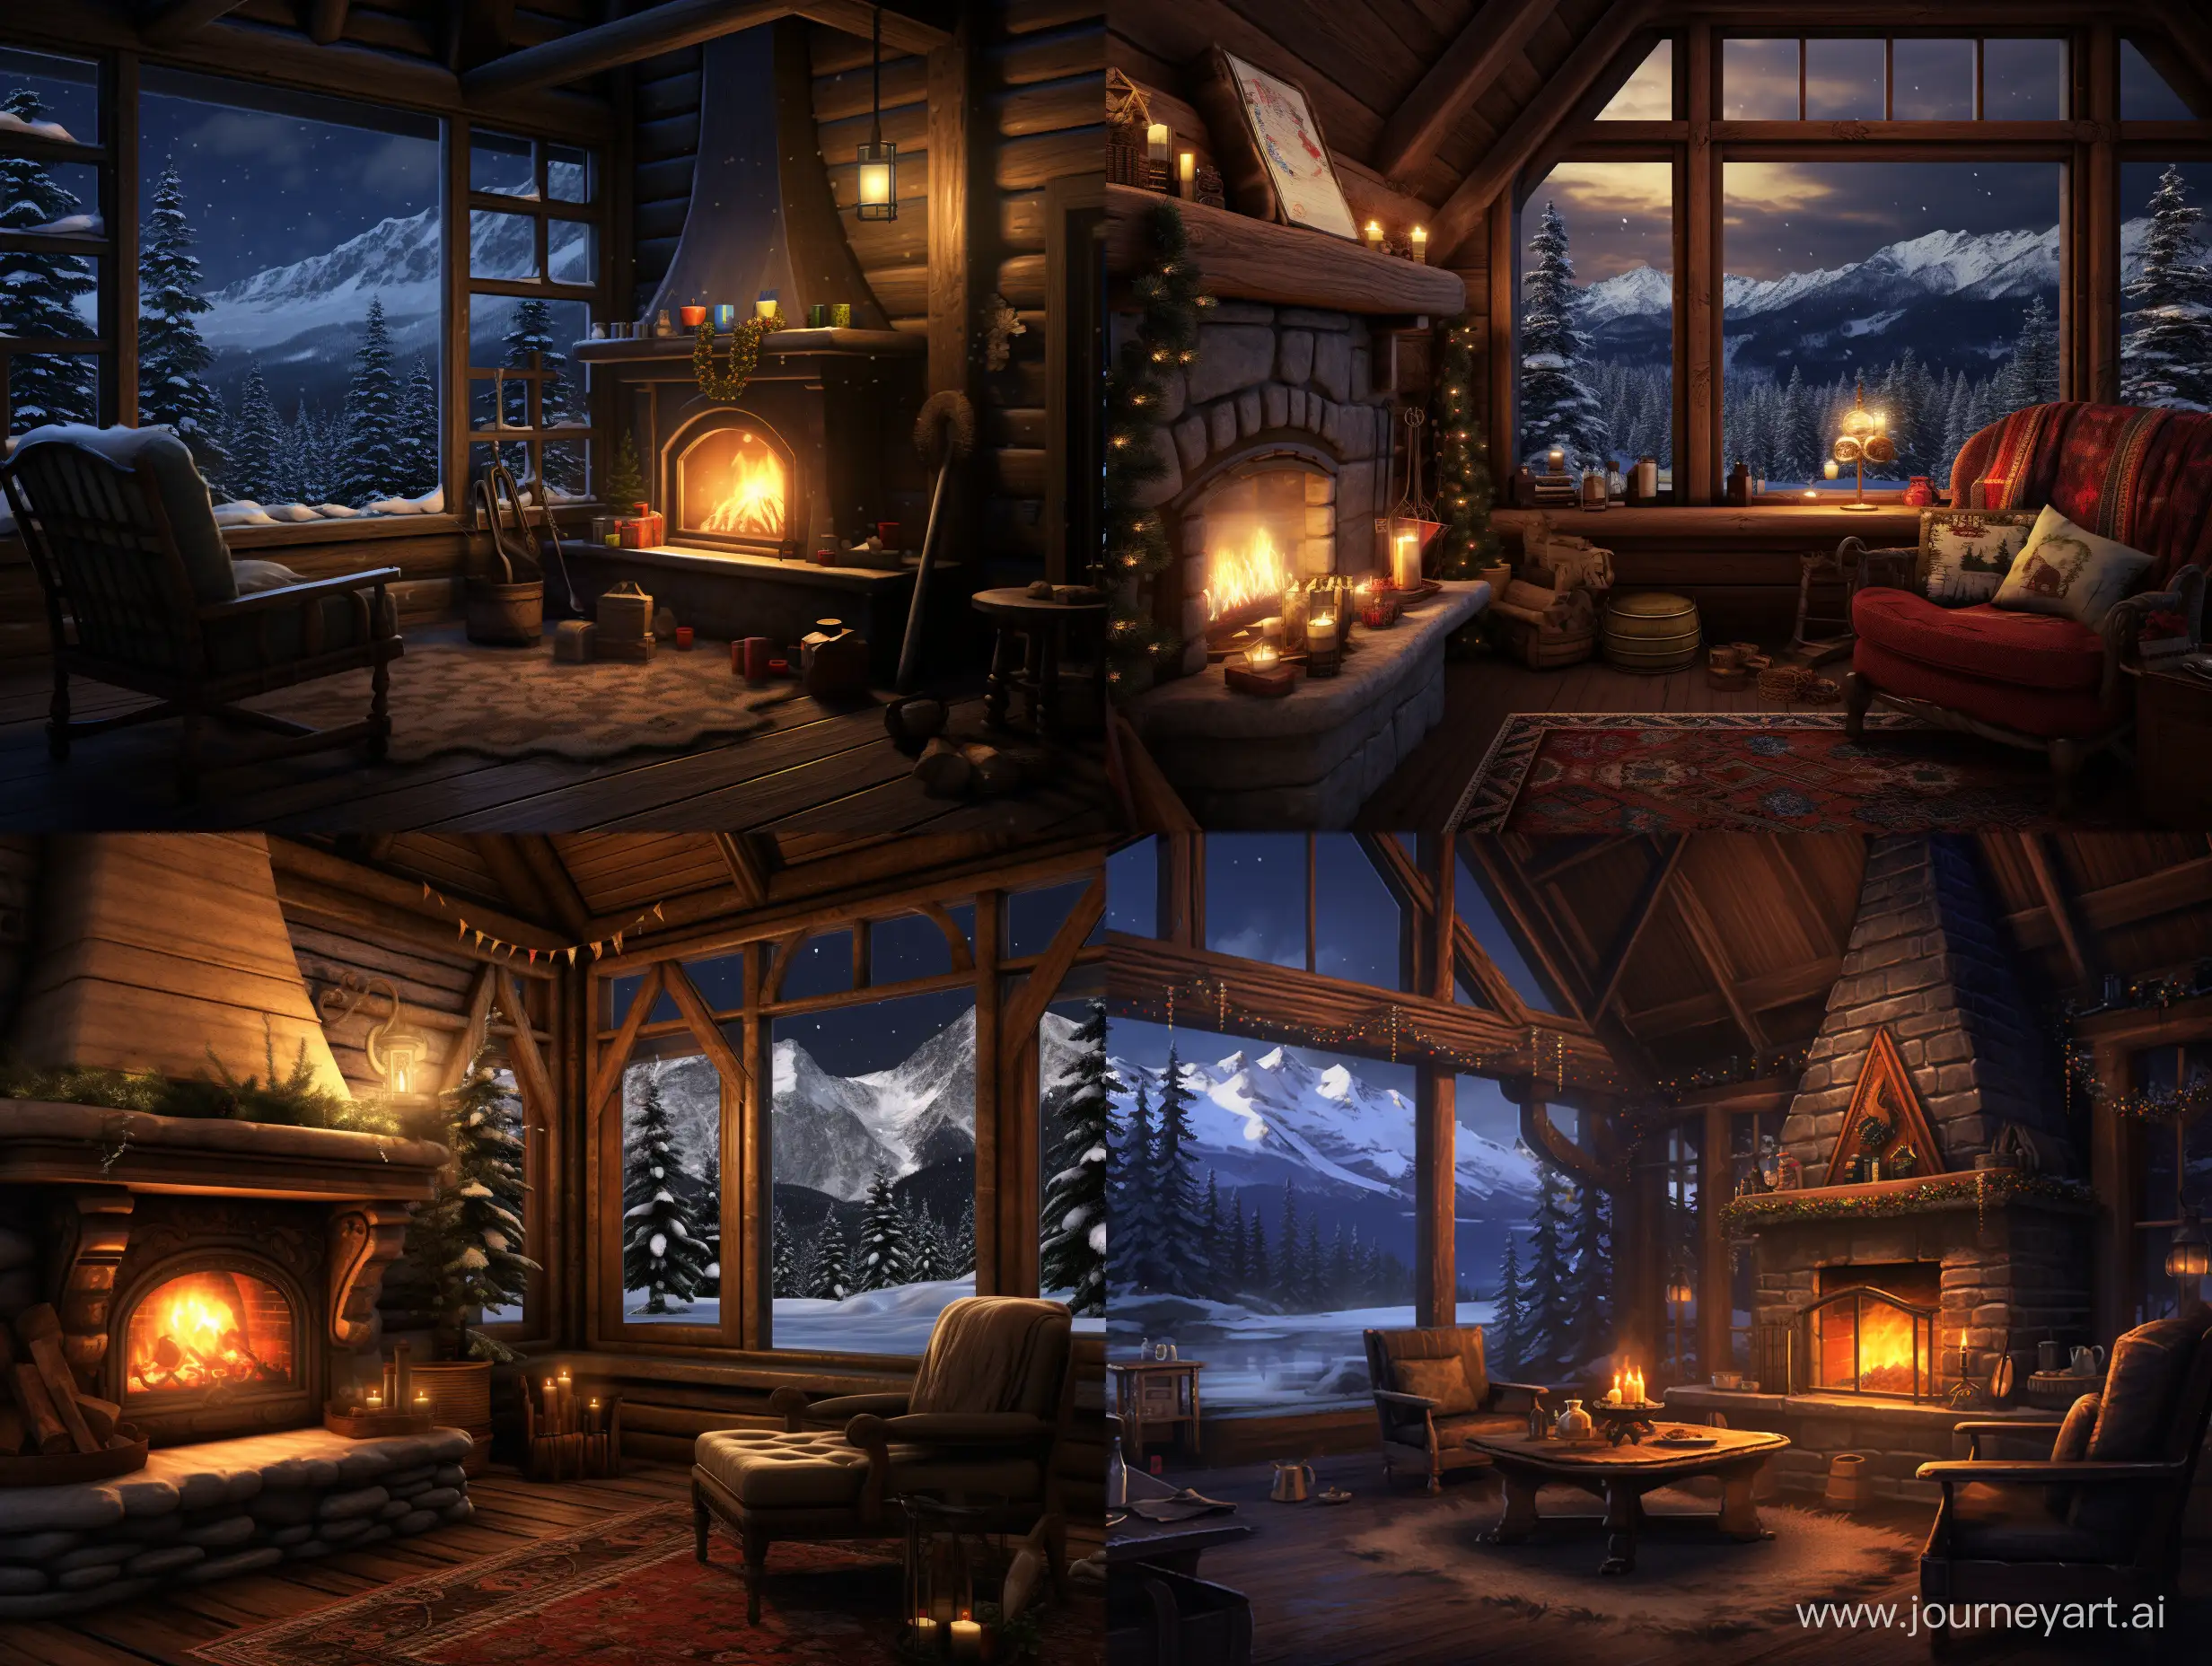 cozy cabin, snowing outside, fireplace